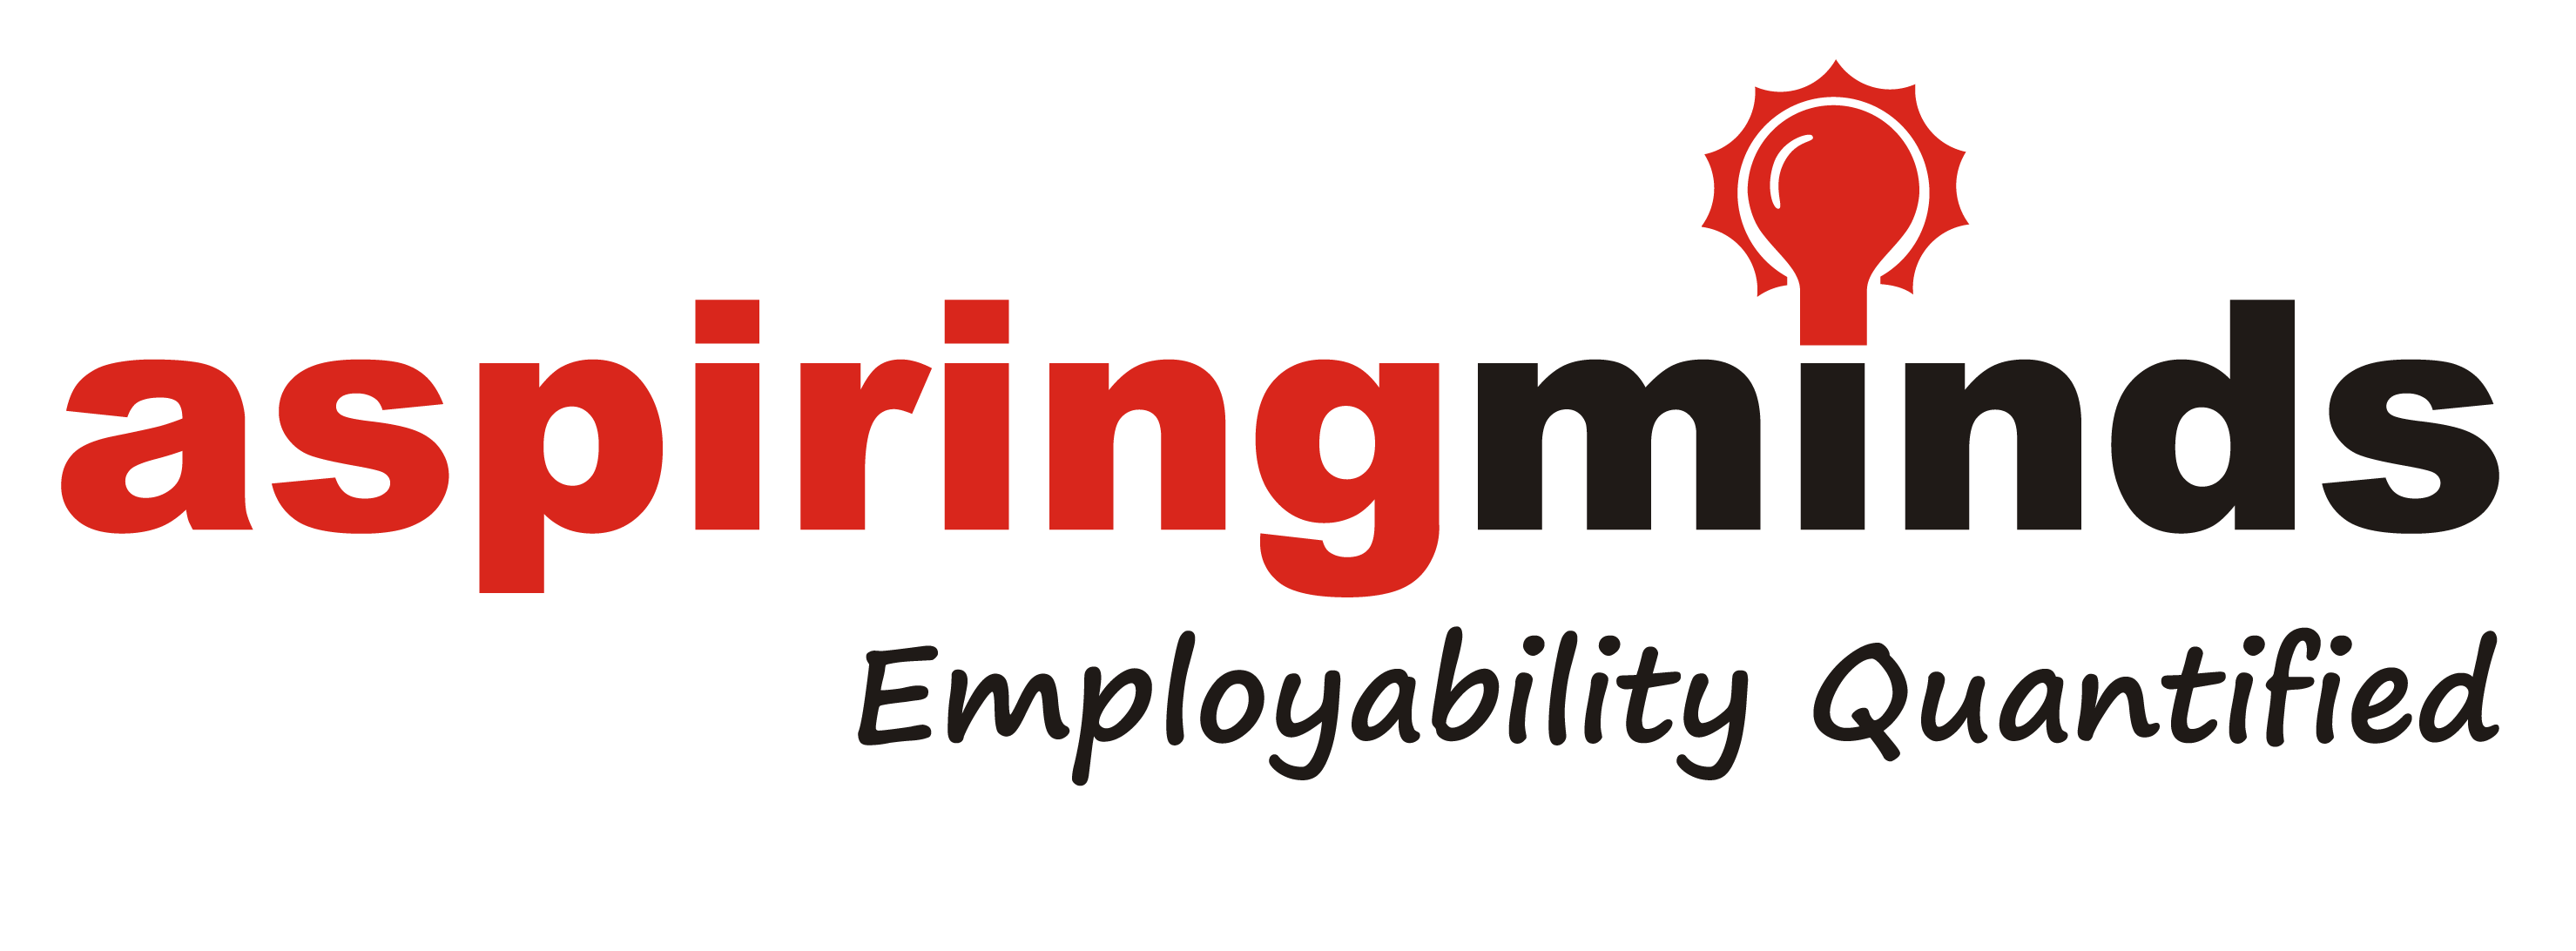 aspiring-minds-launches-first-standardized-employability-test-in-us-to-bridge-employer-job